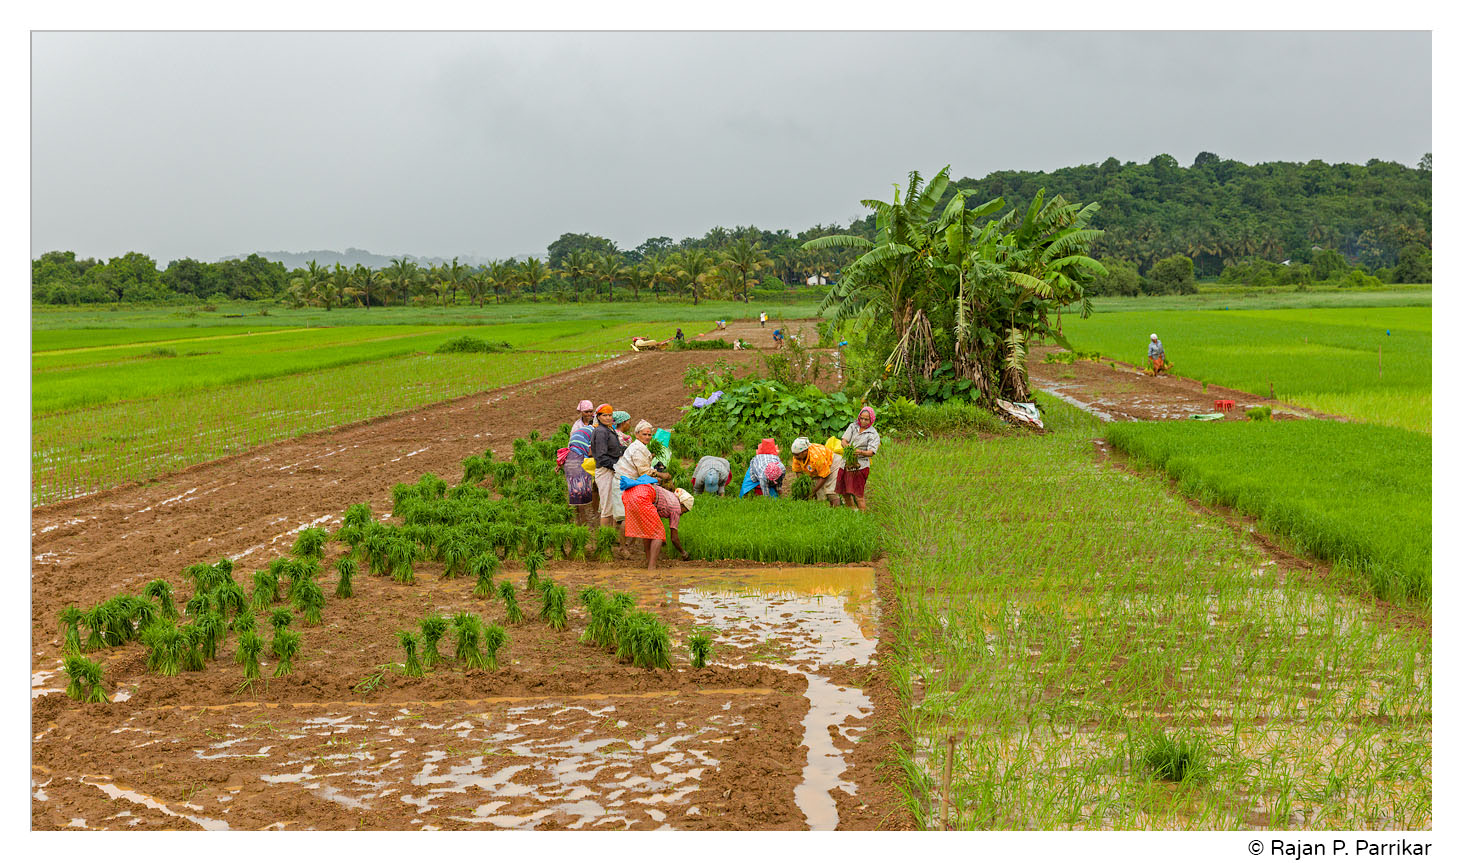 Paddy field work in Ucassaim, Goa